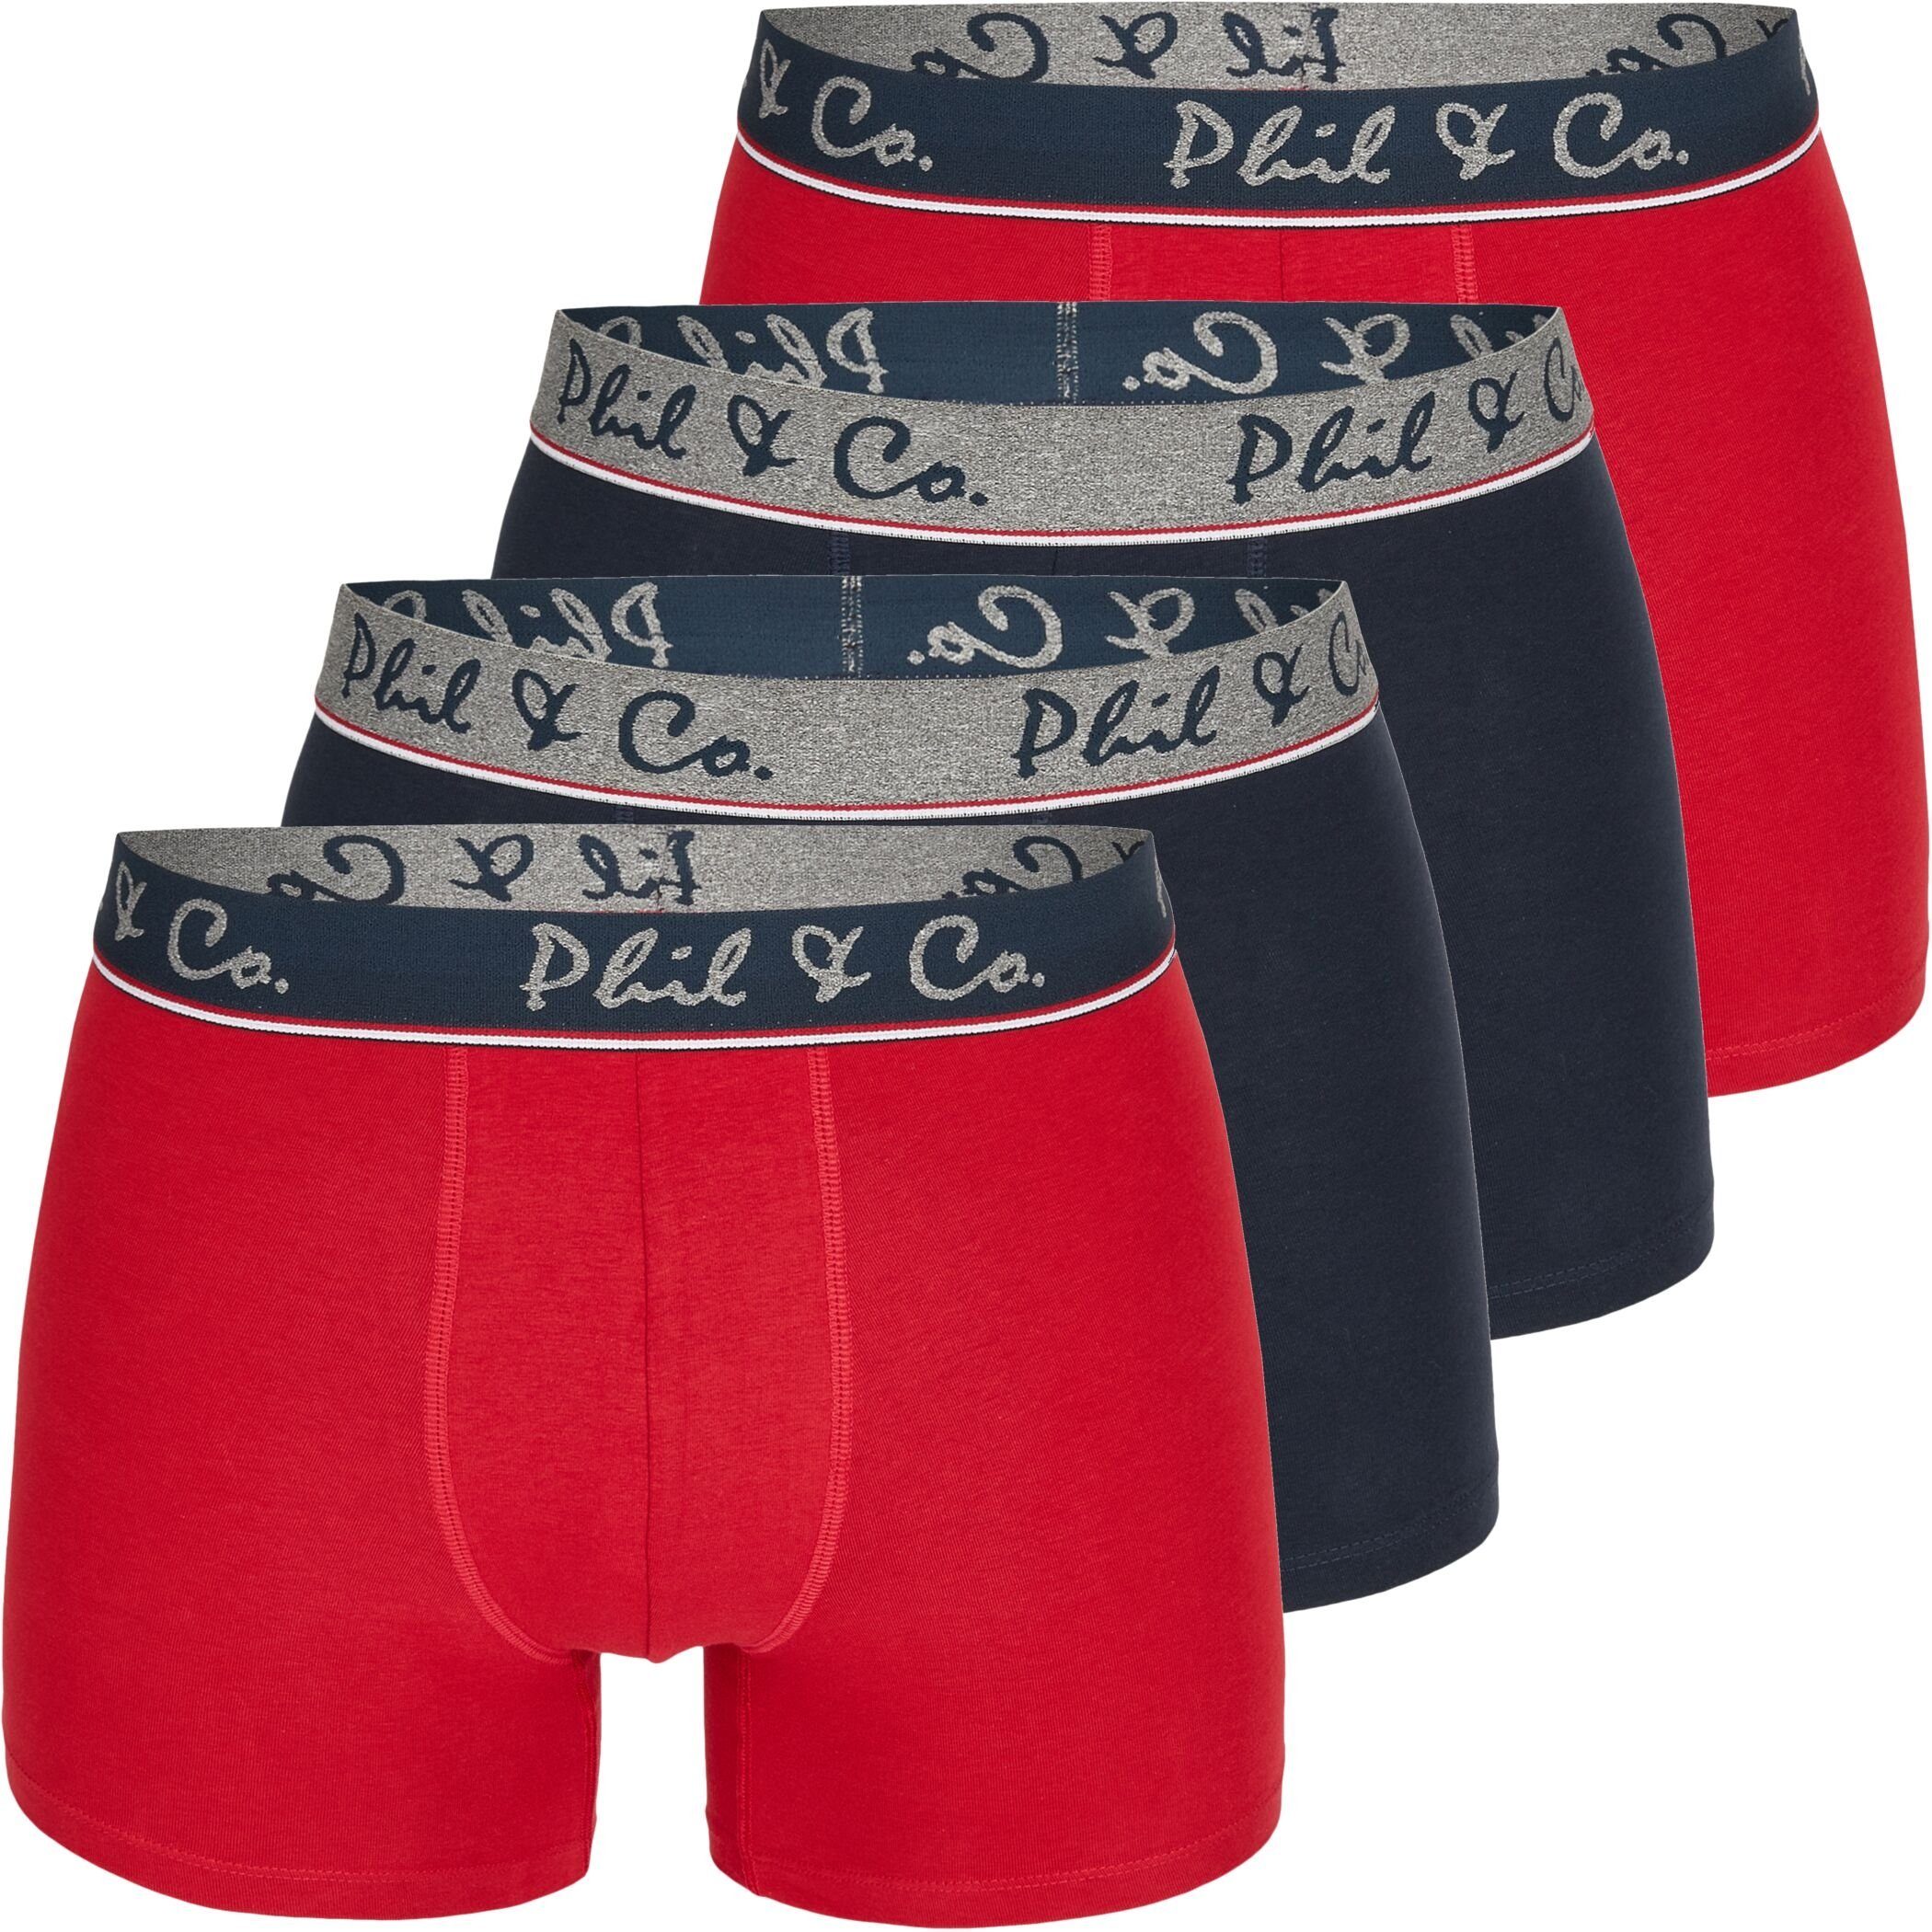 Phil & Co. Boxershorts 4er Pack Phil & Co Berlin Jersey Boxershorts Trunk Short Pant FARBWAHL (1-St) DESIGN 21